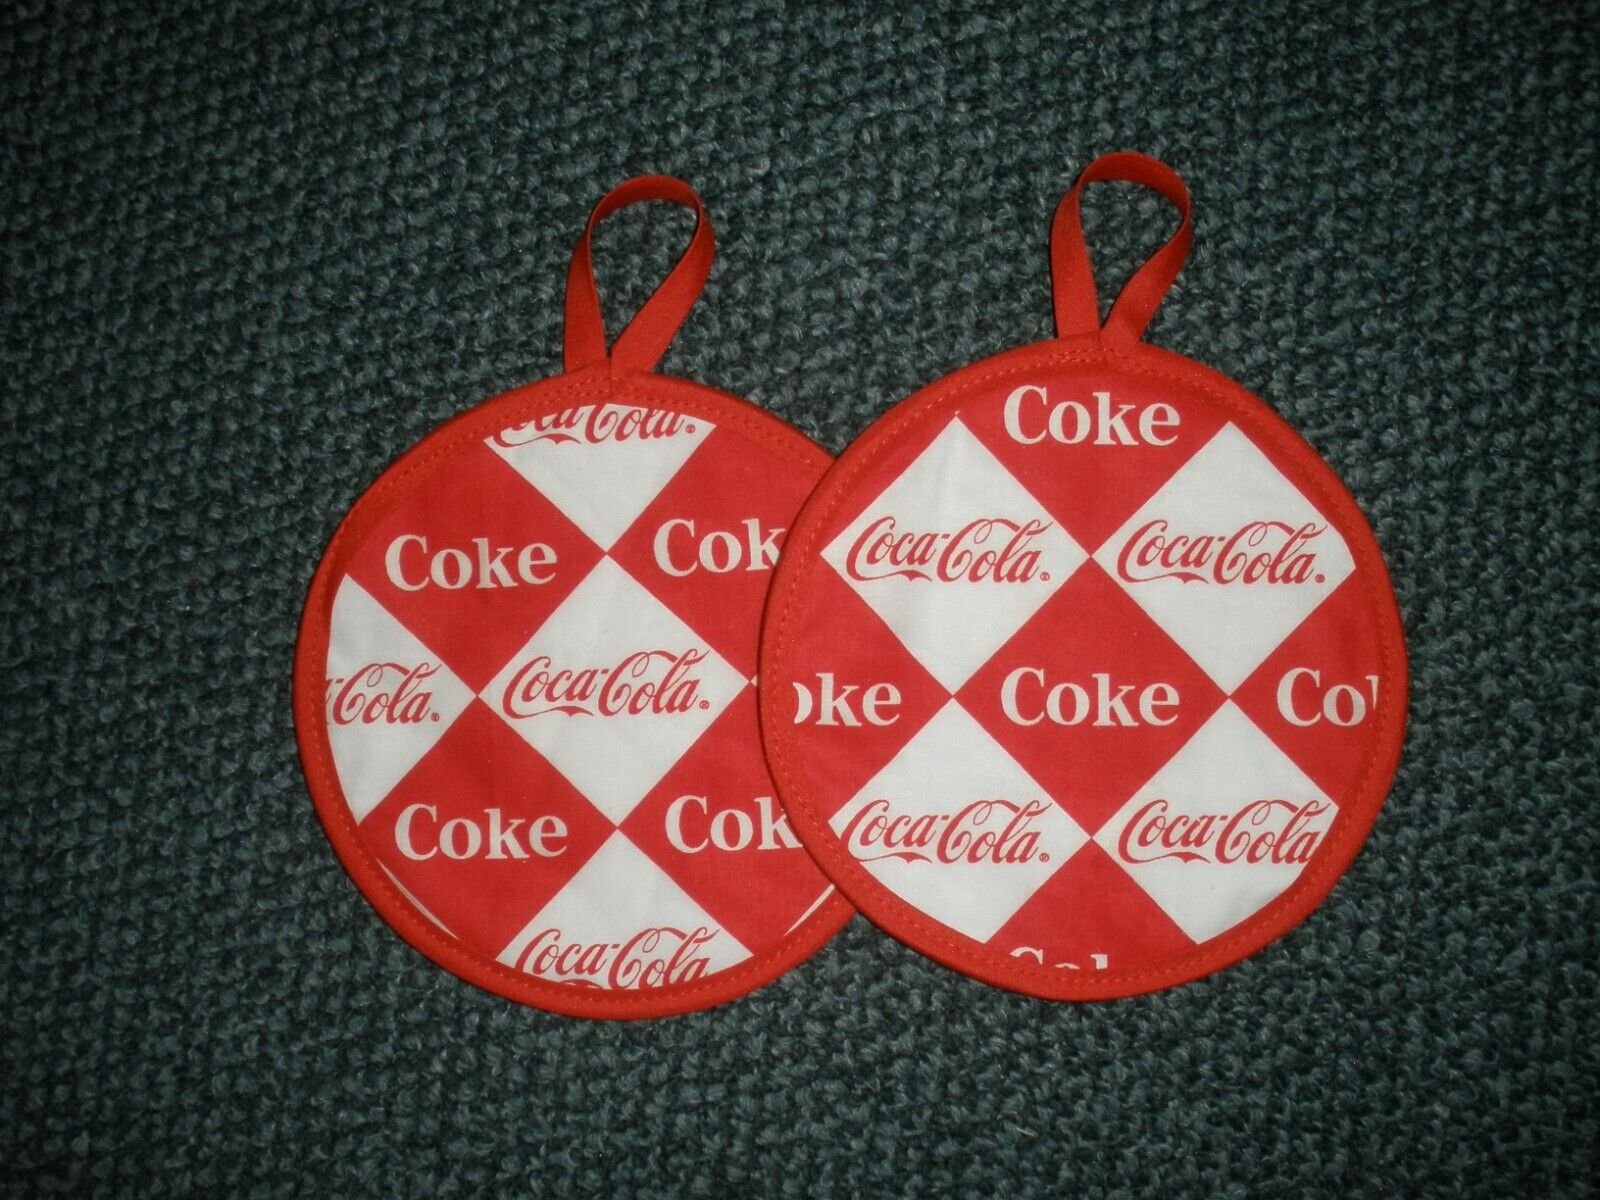 Coca Cola Coke characters potholders